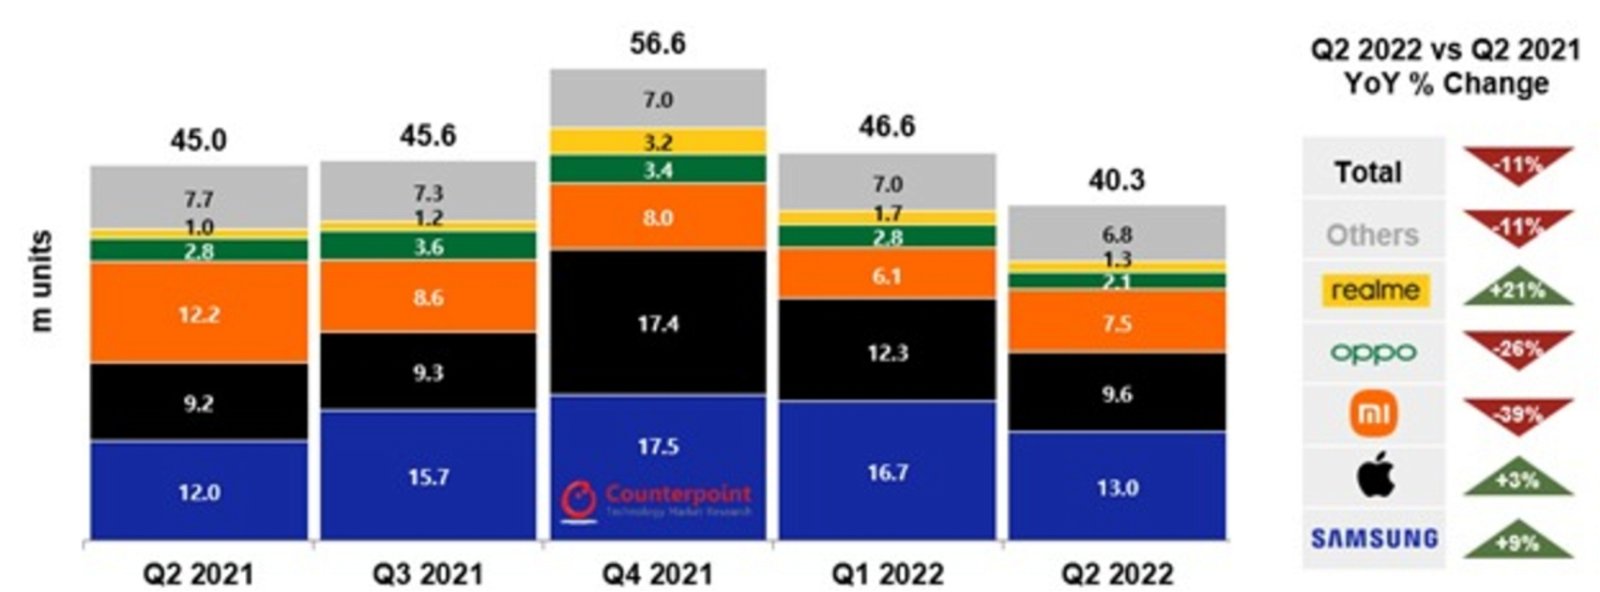 El mercado móvil en el Q2 de 2022